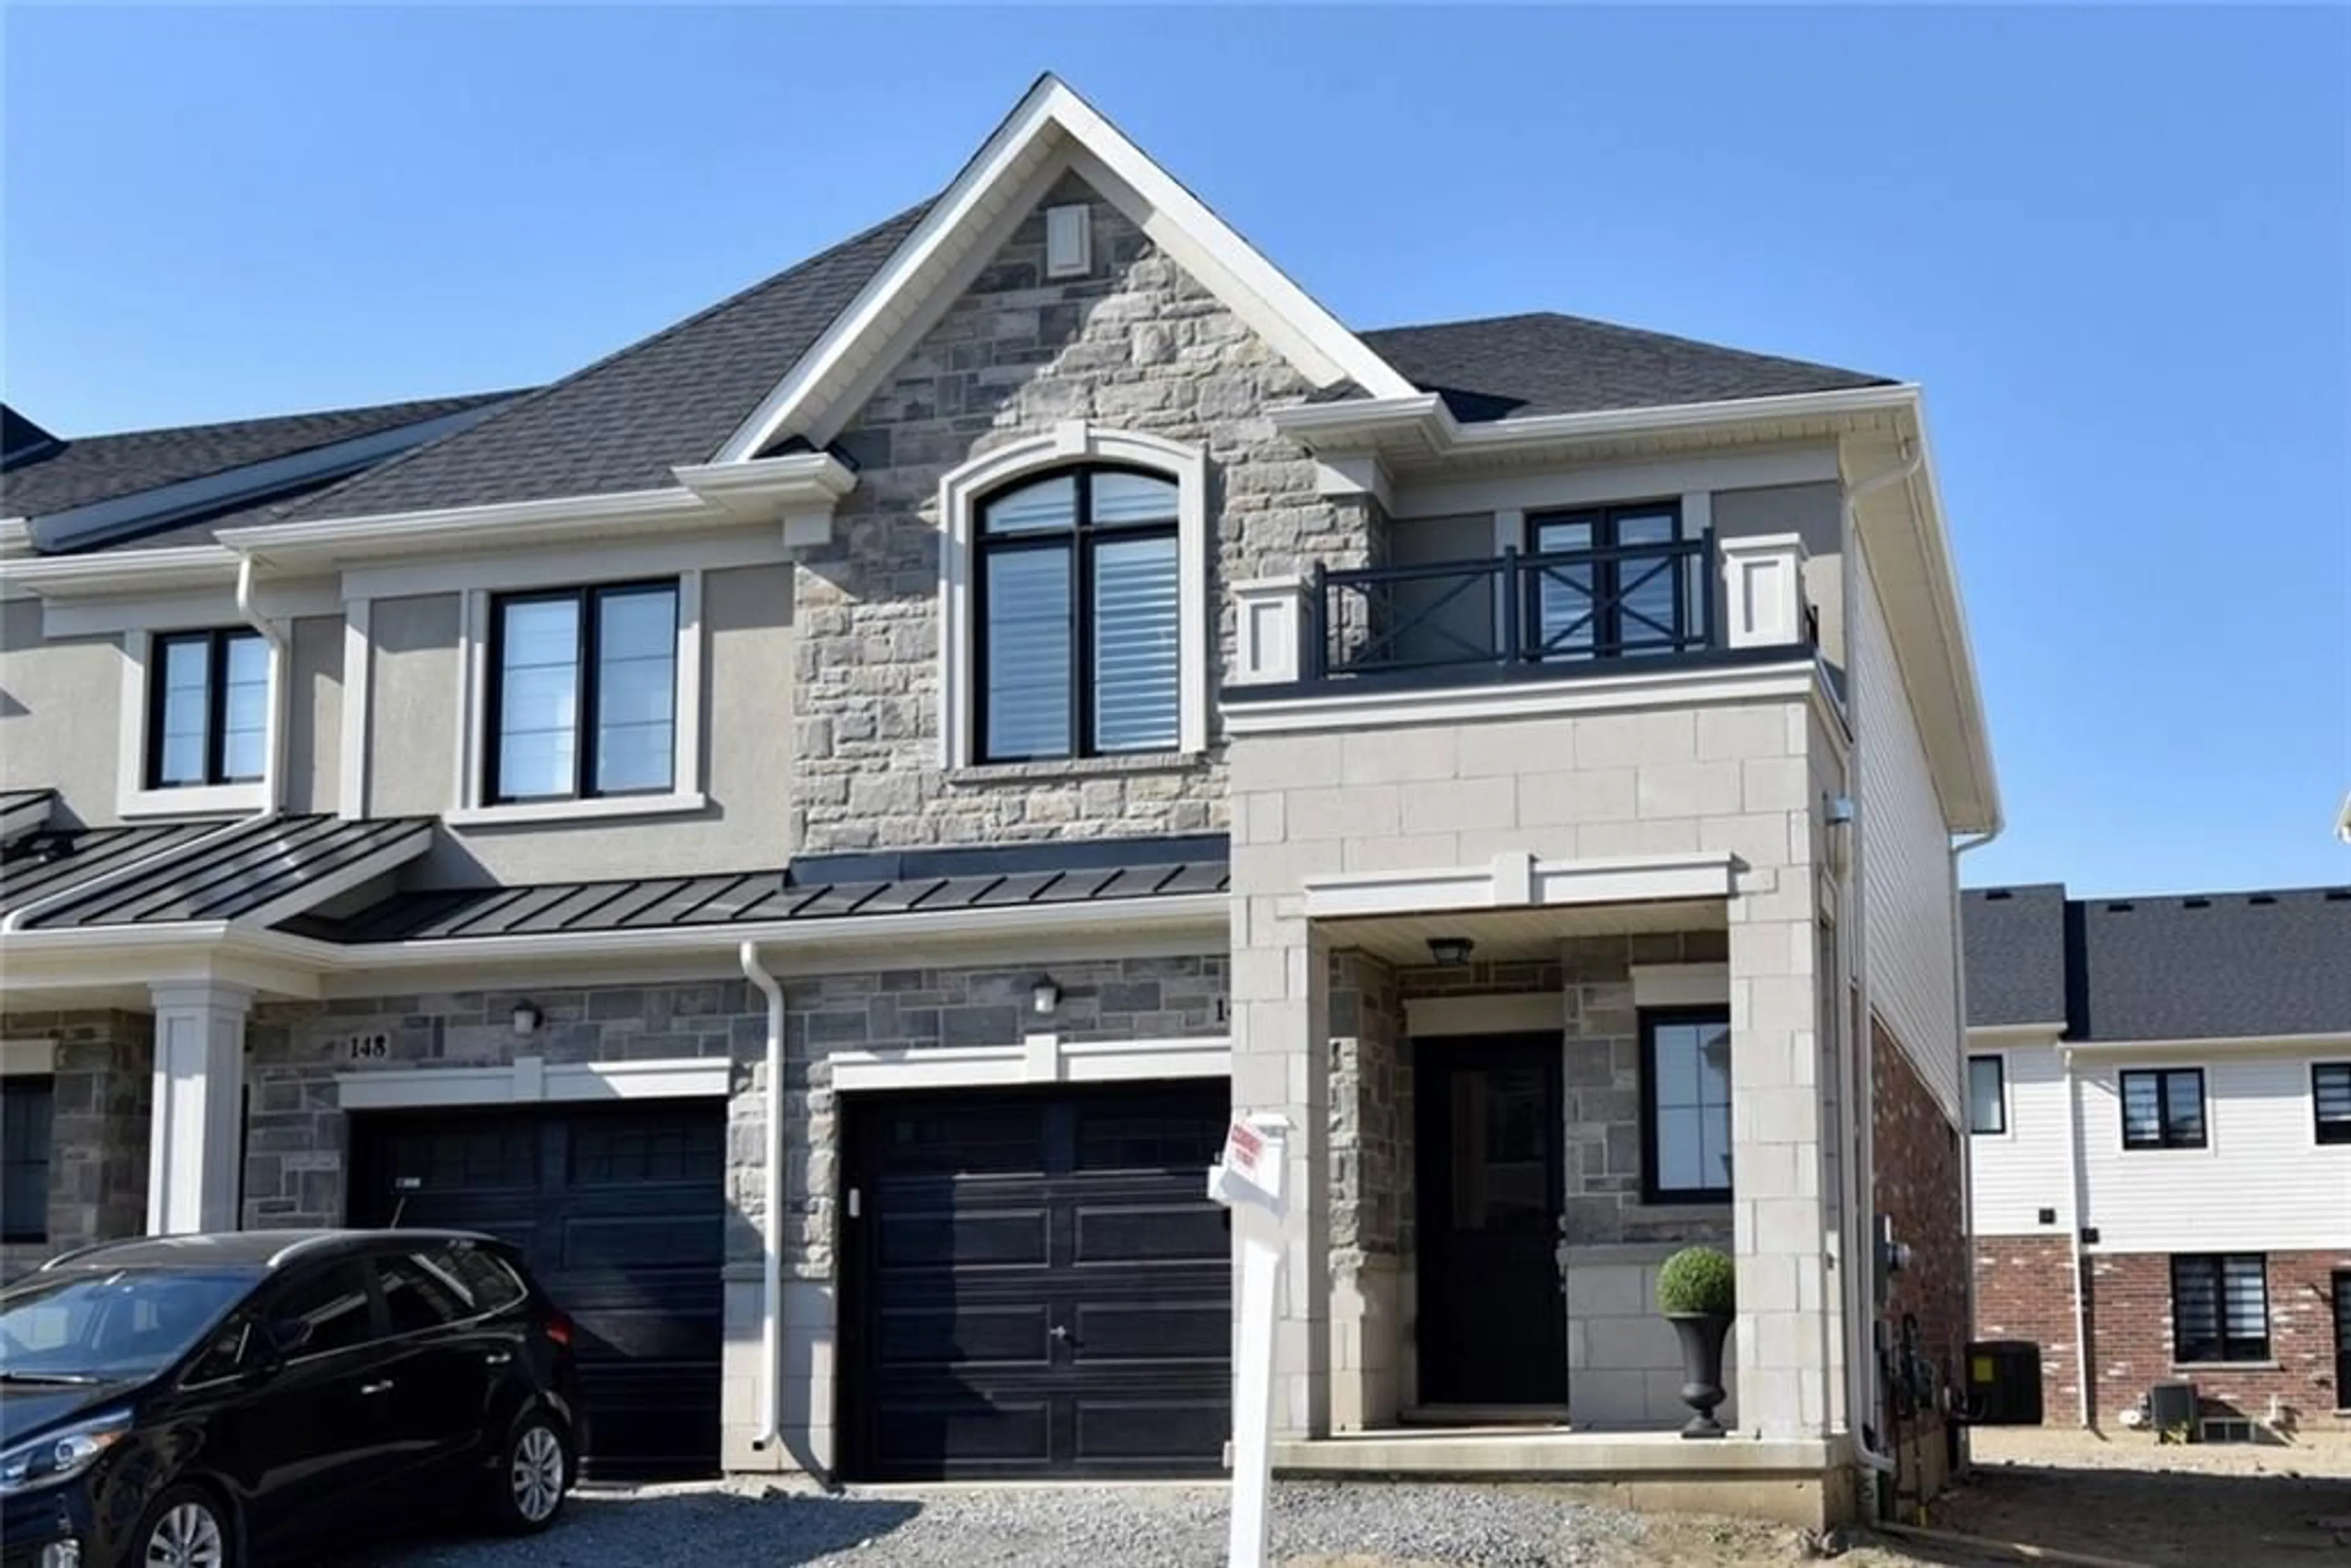 Home with brick exterior material for 146 Aquasanta Cres, Hamilton Ontario L9B 1K2